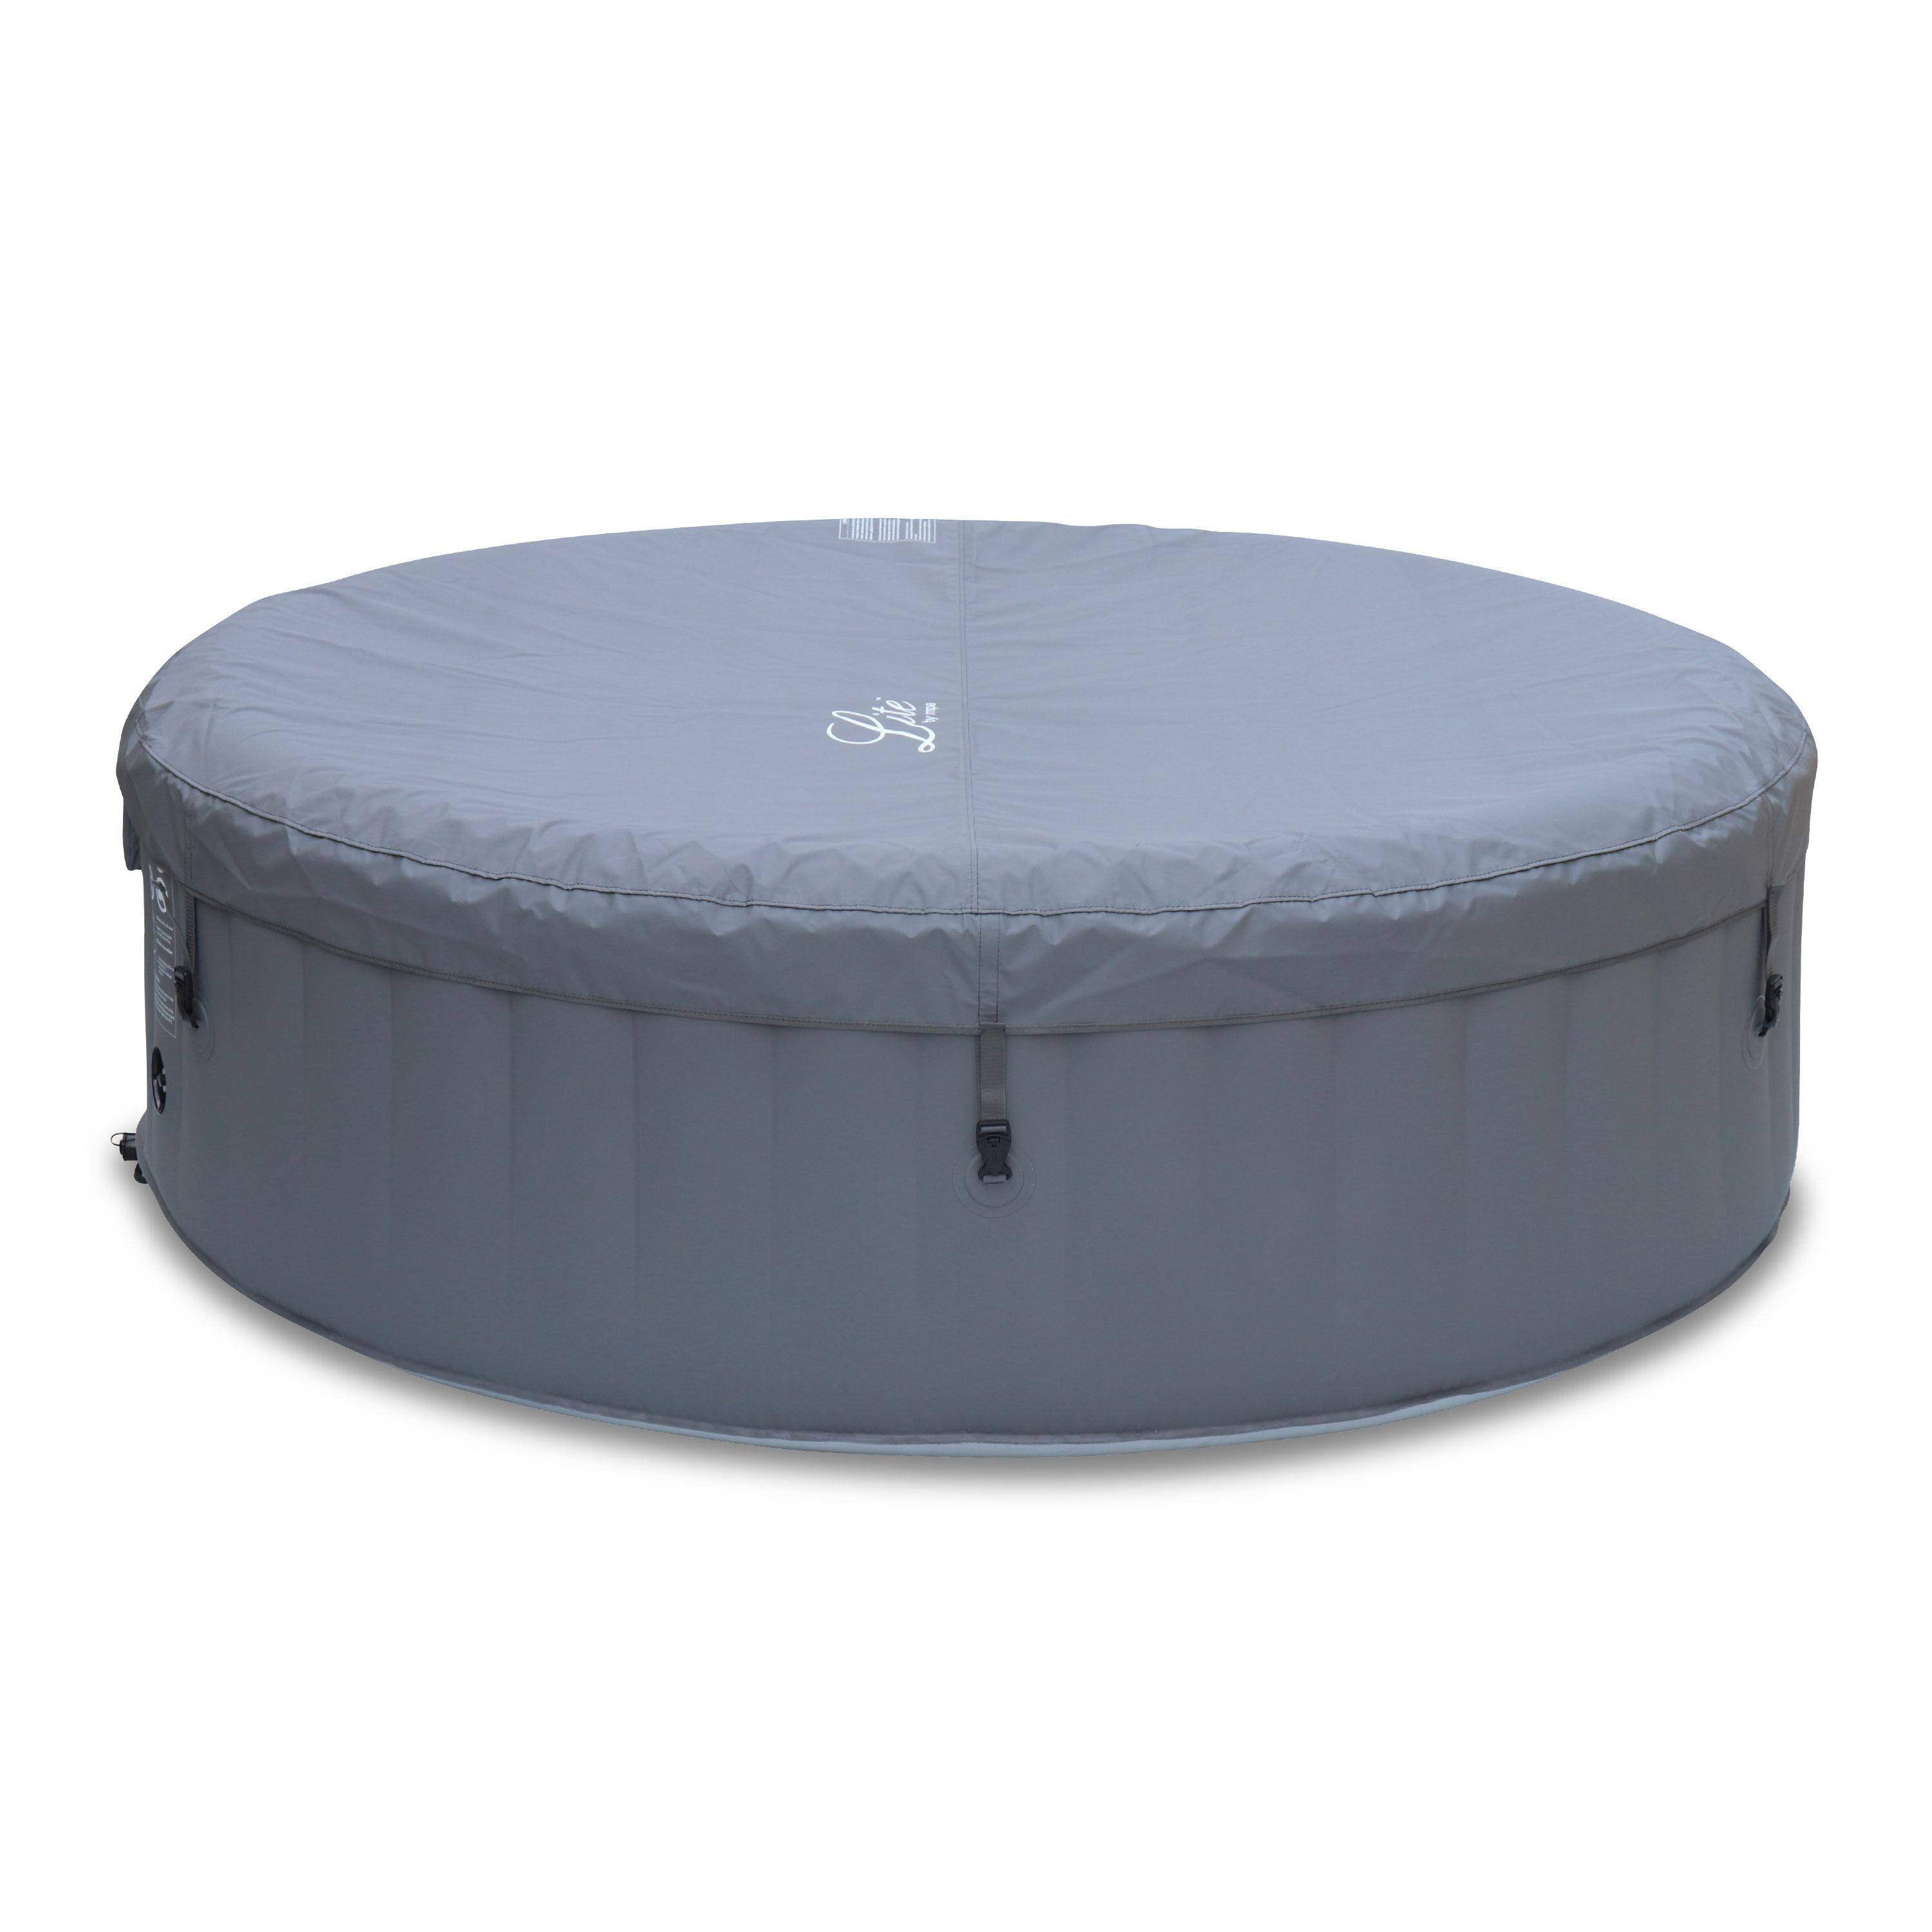  6-person round inflatable hot tub MSpa - Ø205cm round 6-person spa, PVC, pump, heater, filter, remote control - Kili 6 - Grey,sweeek,Photo2